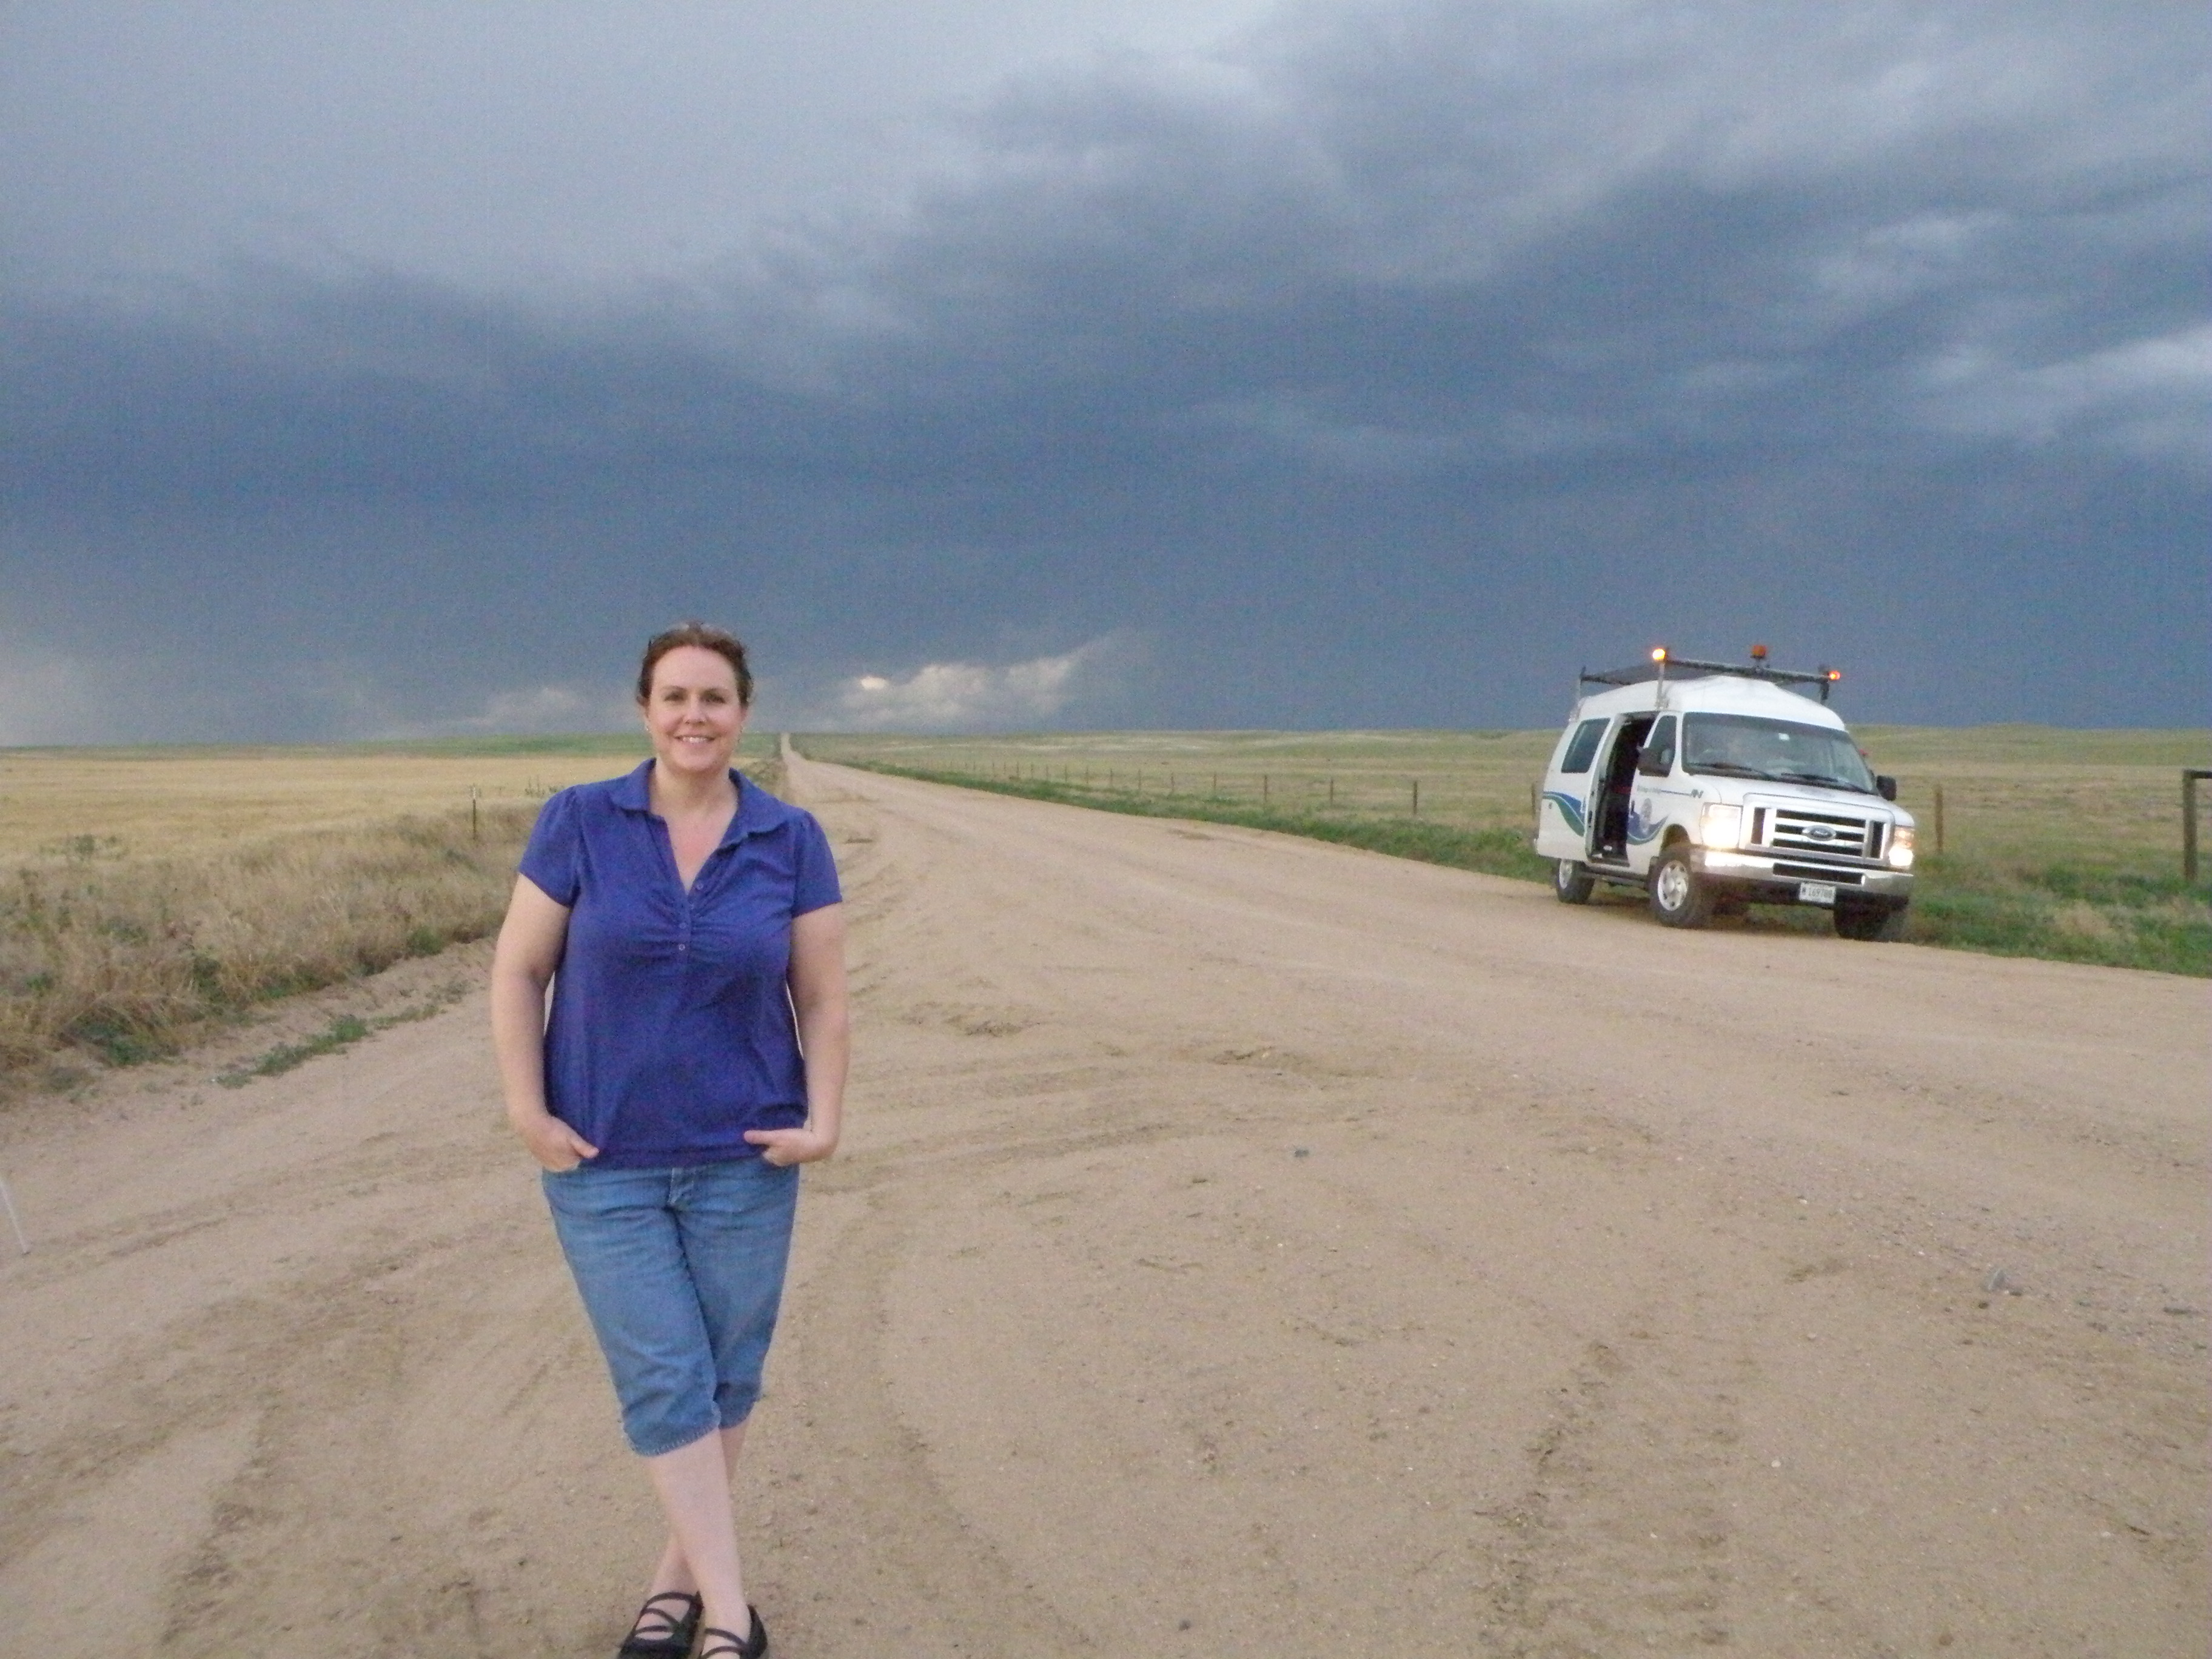 Storm Chasing in the Nebraska Panhandle, 2009.